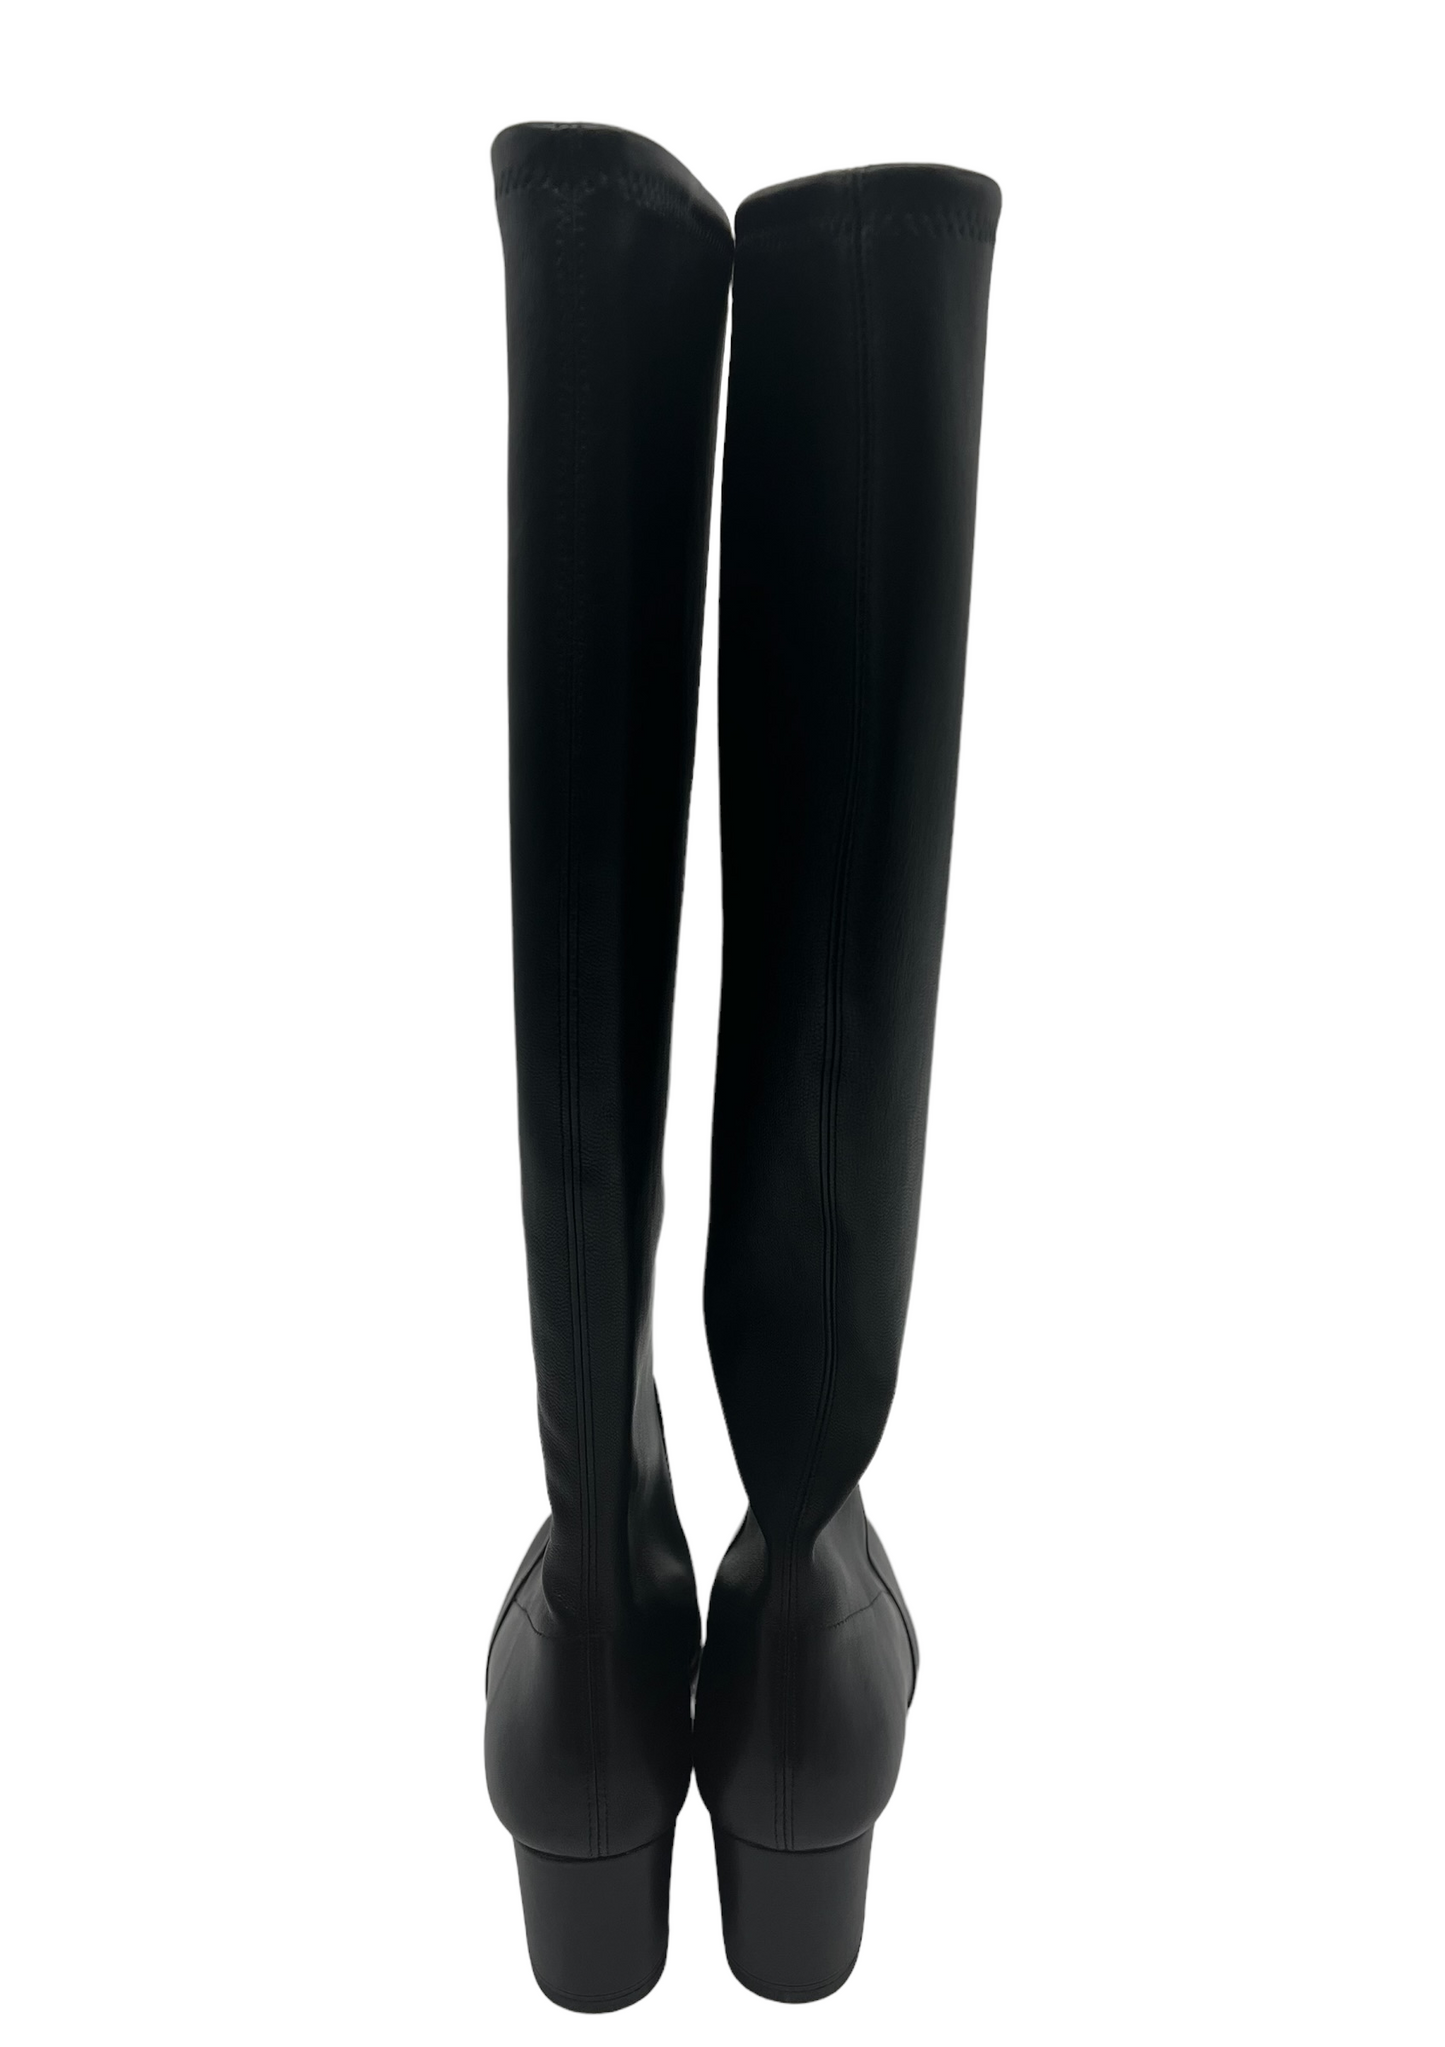 Stuart Weitzman Black Leather Liviana Knee High Size 7 Boots